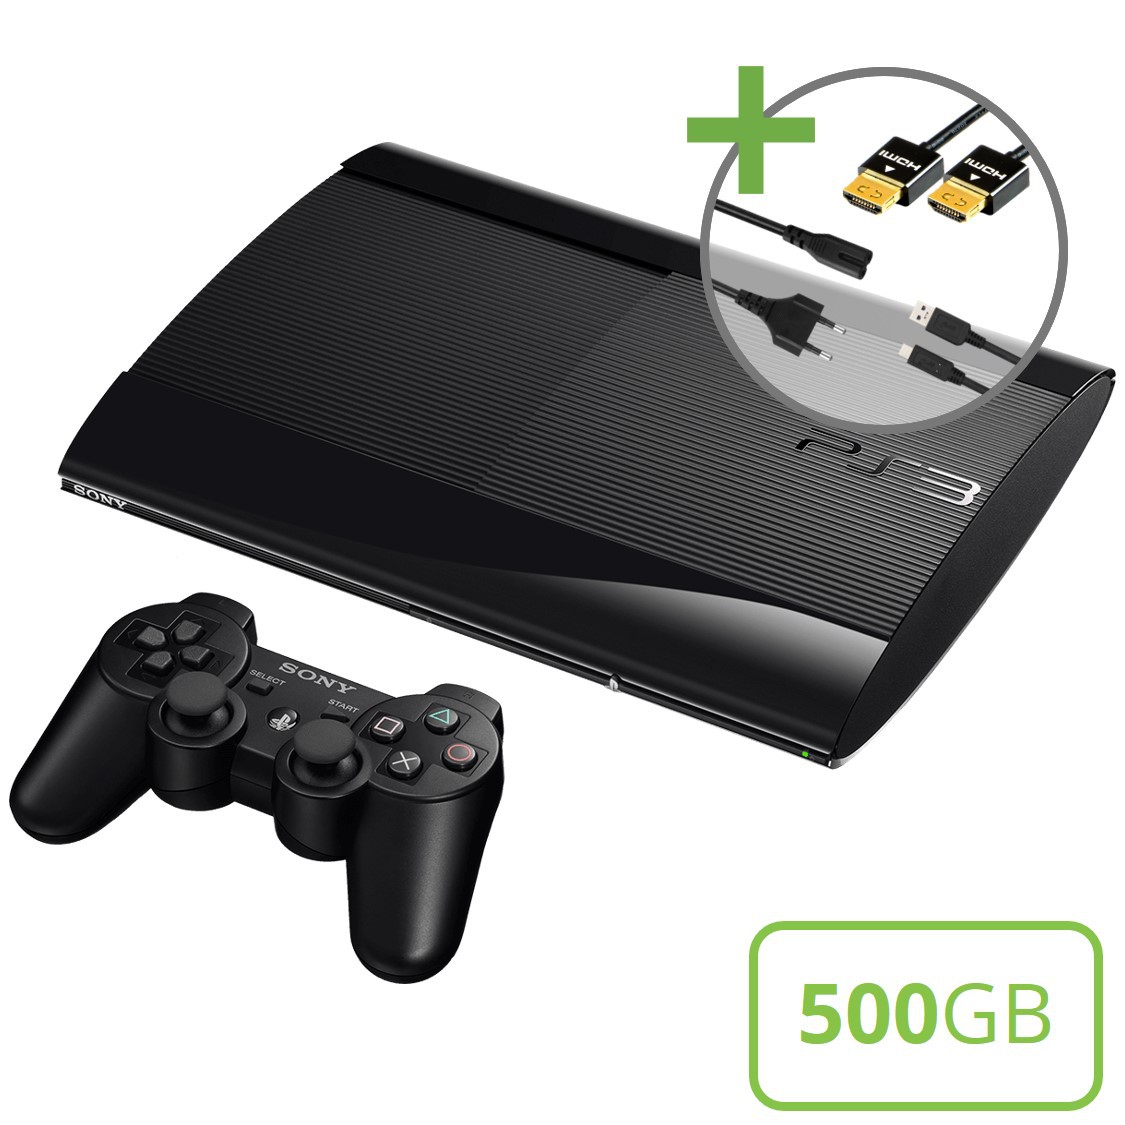 Sony PlayStation 3 Super Slim (500GB) Starter Pack - DualShock Edition - Playstation 3 Hardware